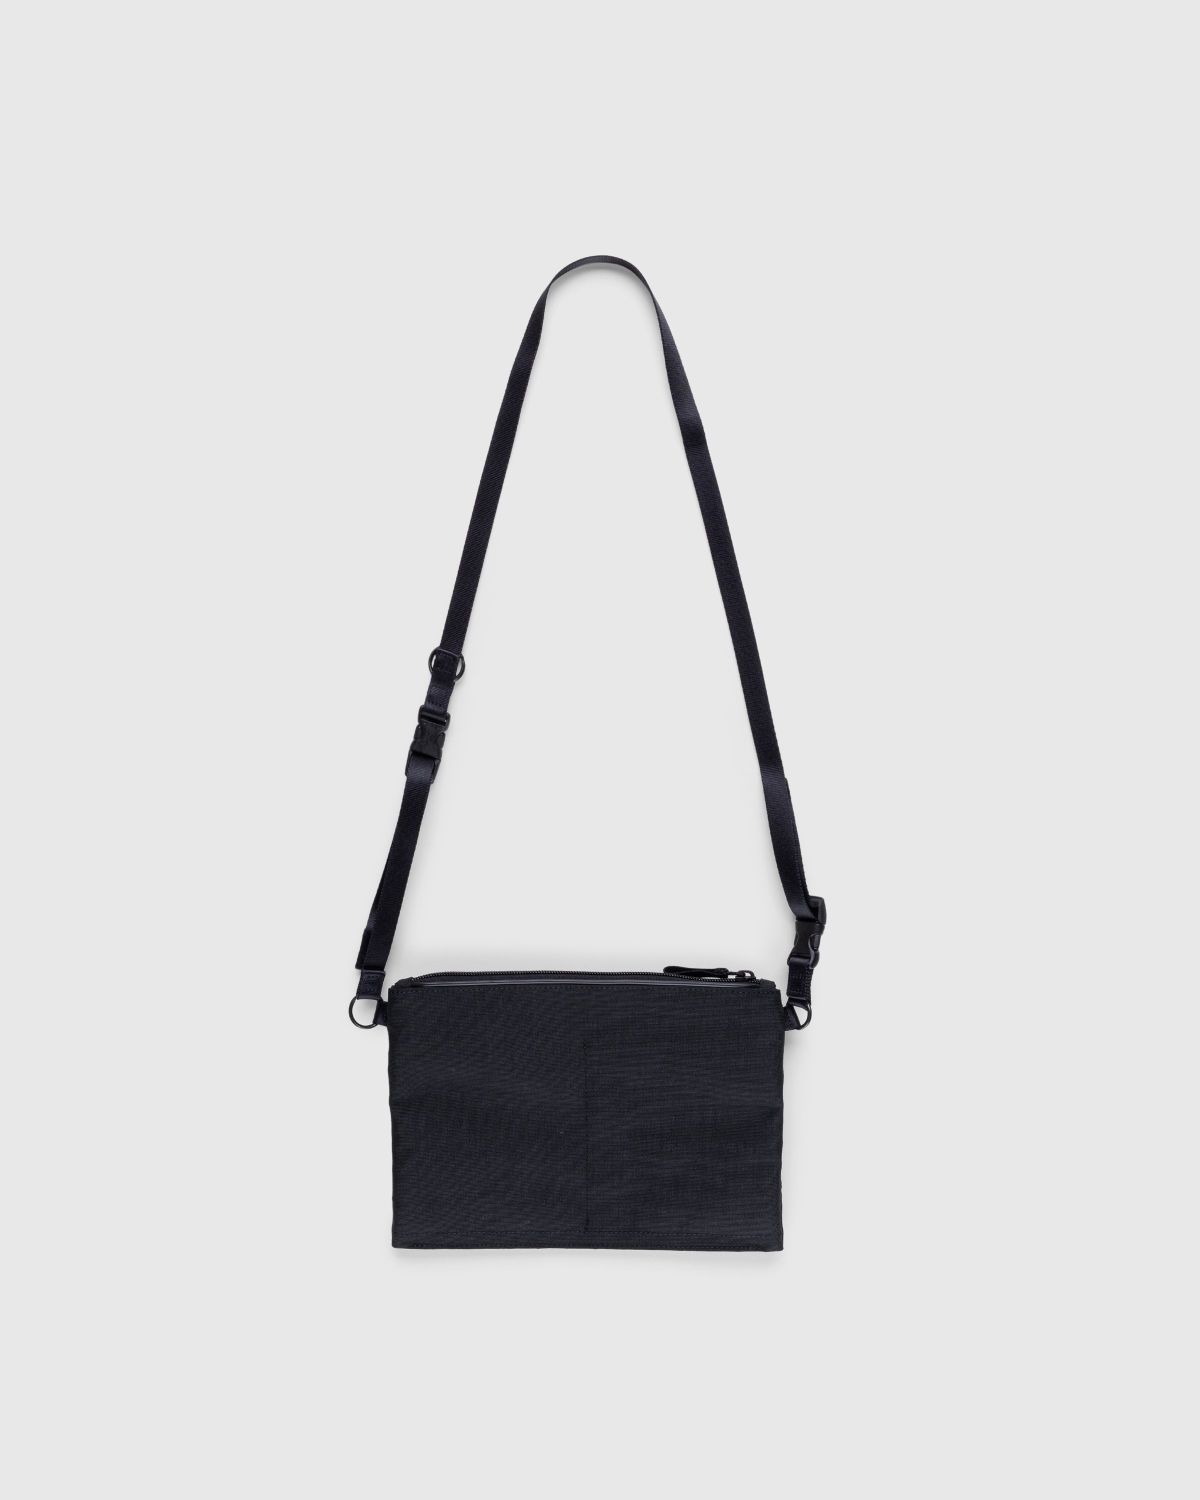 Porter-Yoshida & Co. – Sacoche Hybrid Shoulder Bag Black - Bags - Black - Image 2